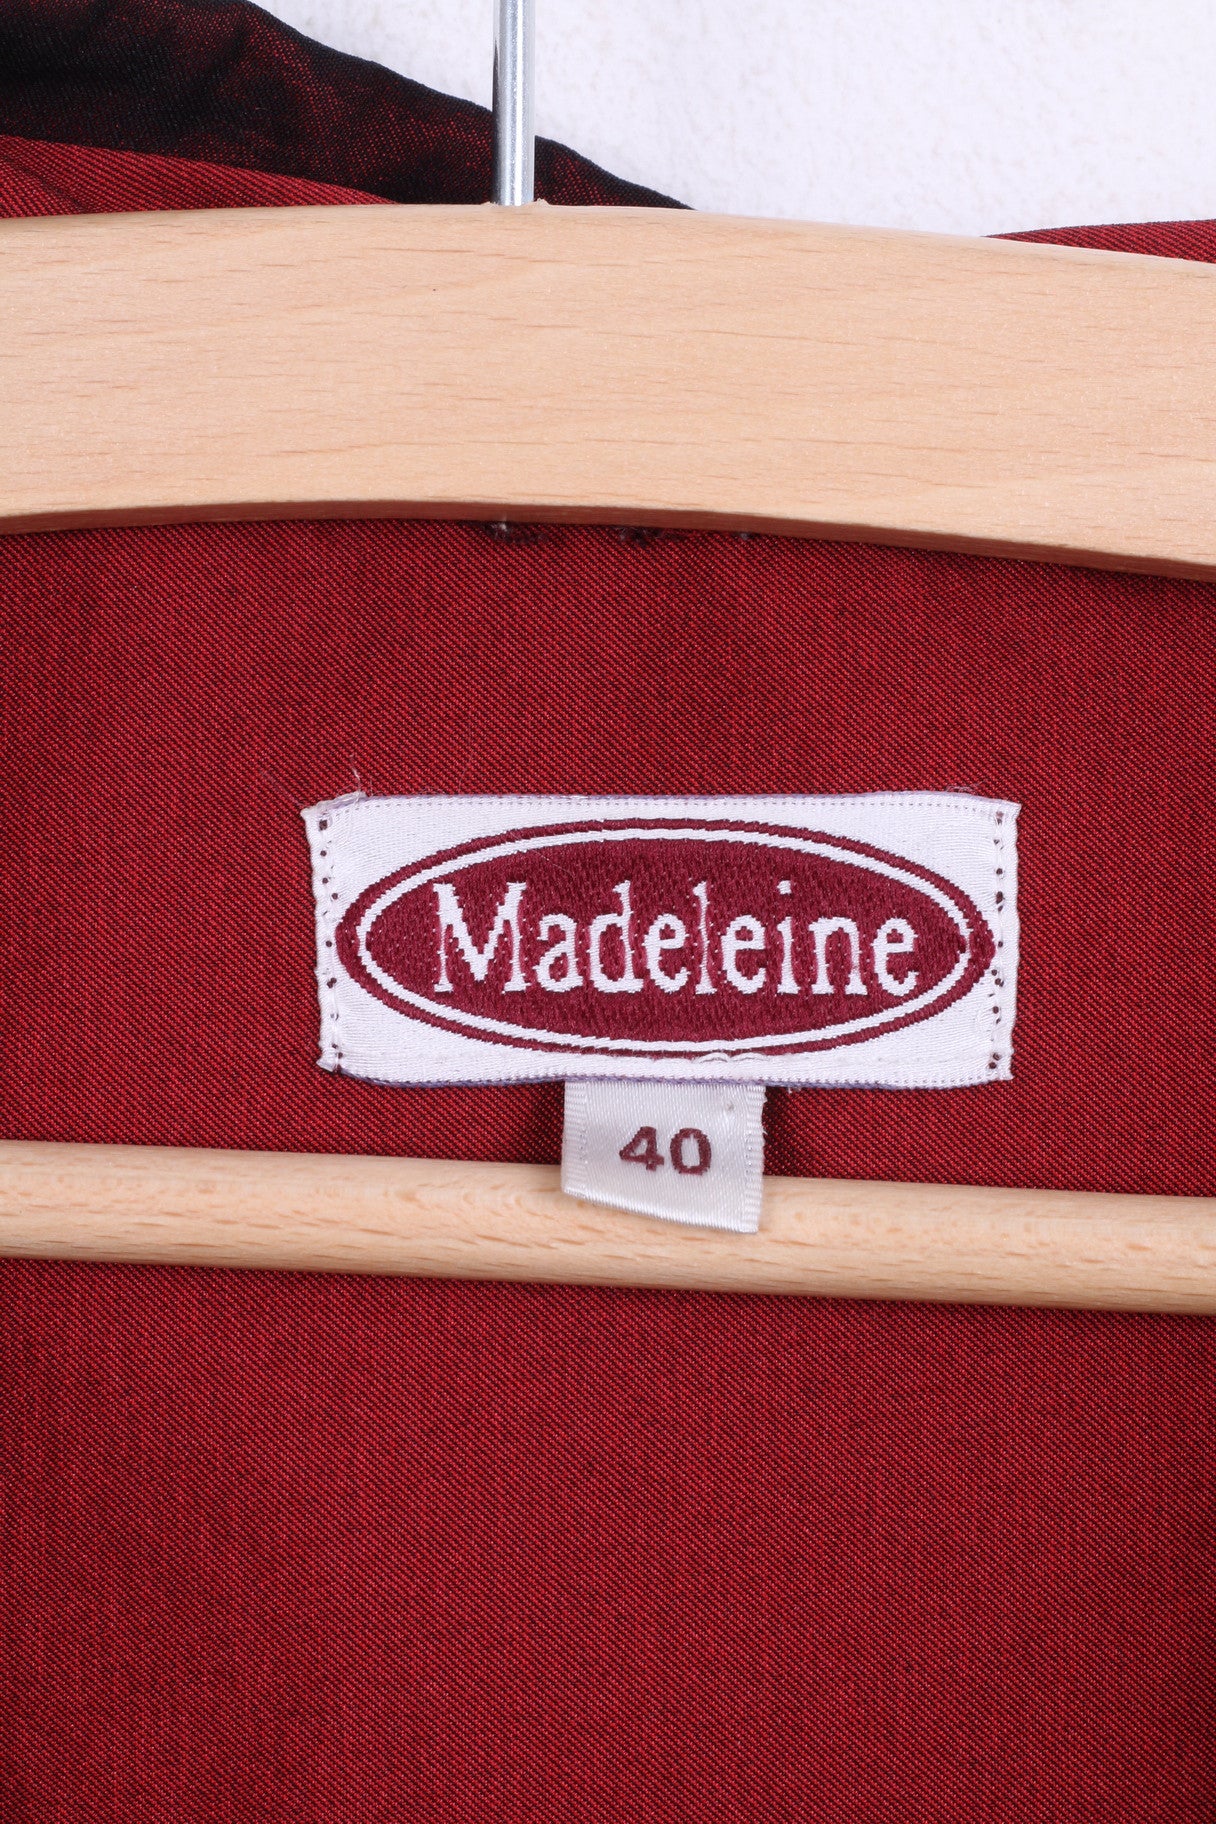 Madeleine Womens 40 L Blazer Jacket Shiny Red Hood Vintage - RetrospectClothes